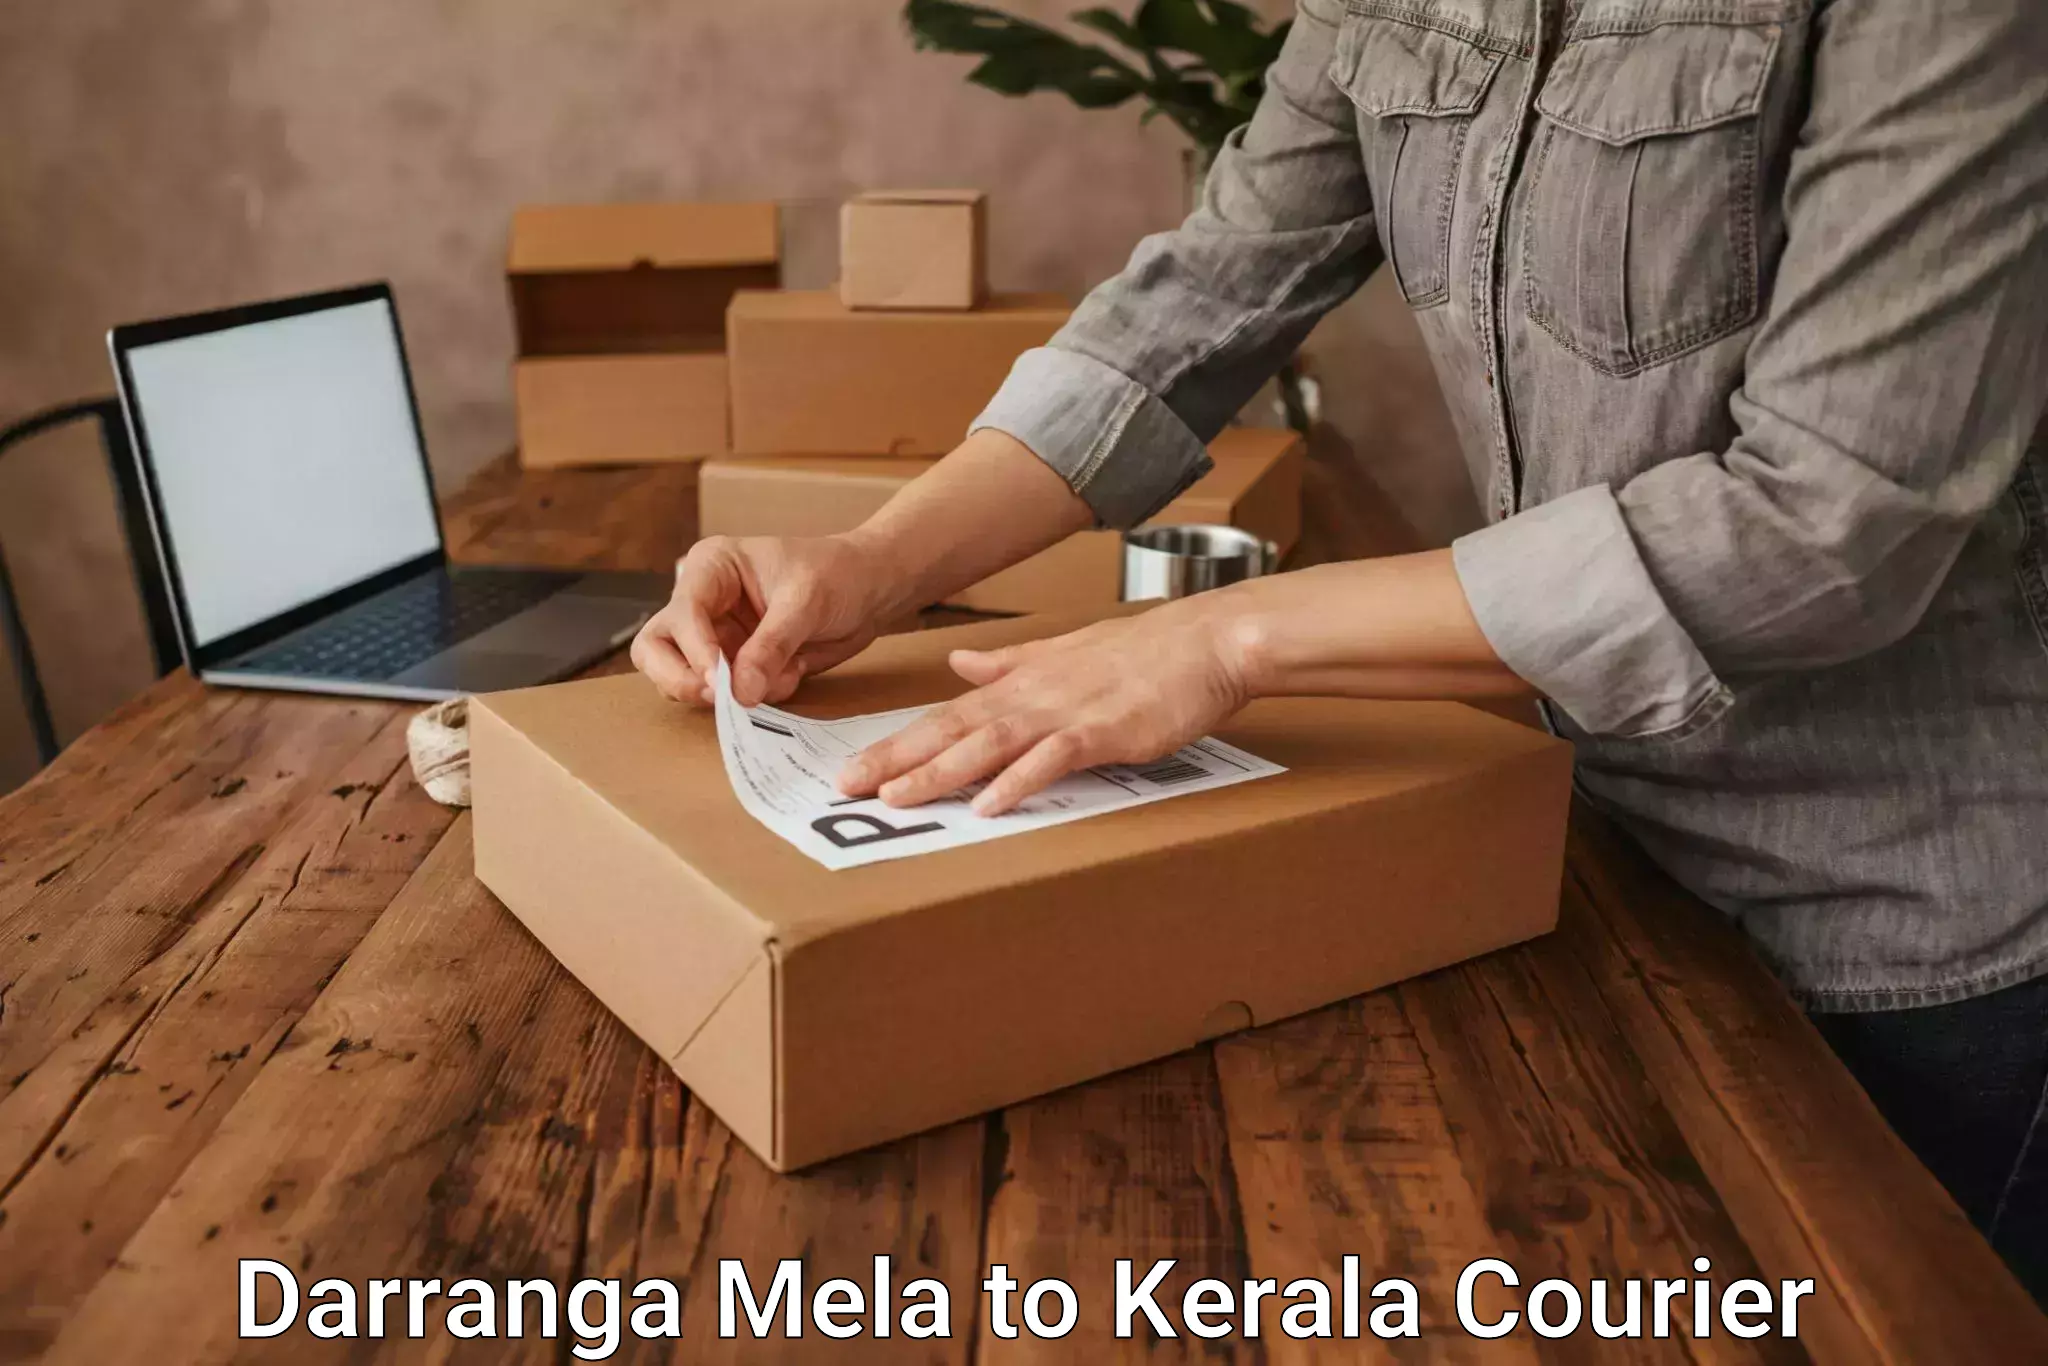 Express delivery capabilities Darranga Mela to Vaduvanchal